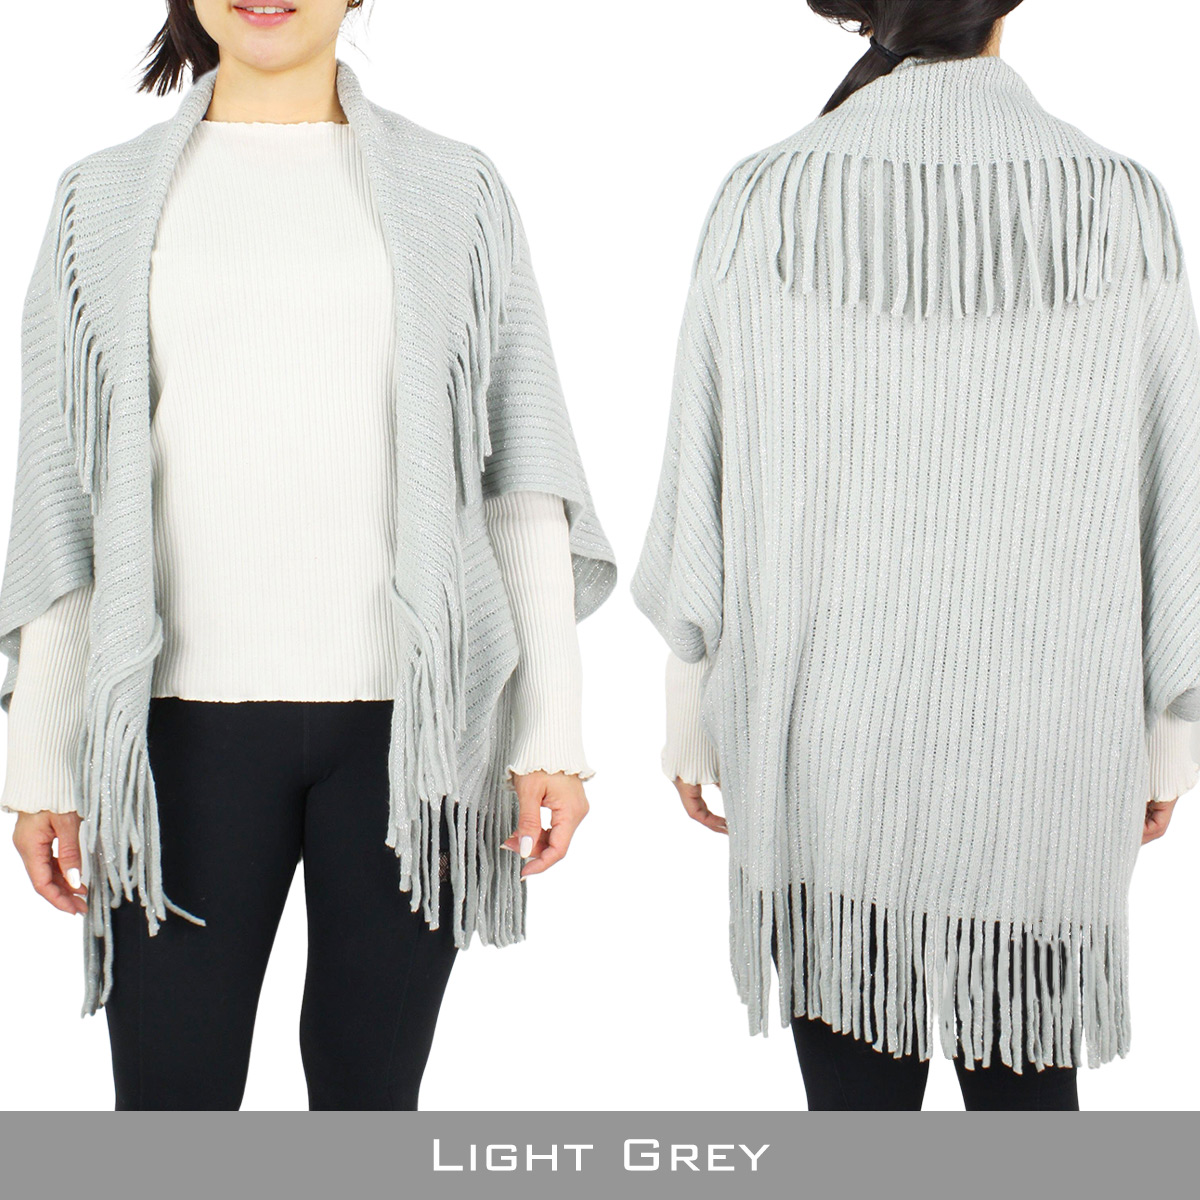 10064 - Lurex Knit Vest/Shrug w/Tassels  10064 - Light Grey<br> 
Lurex Knit Vest - One Size Fits All